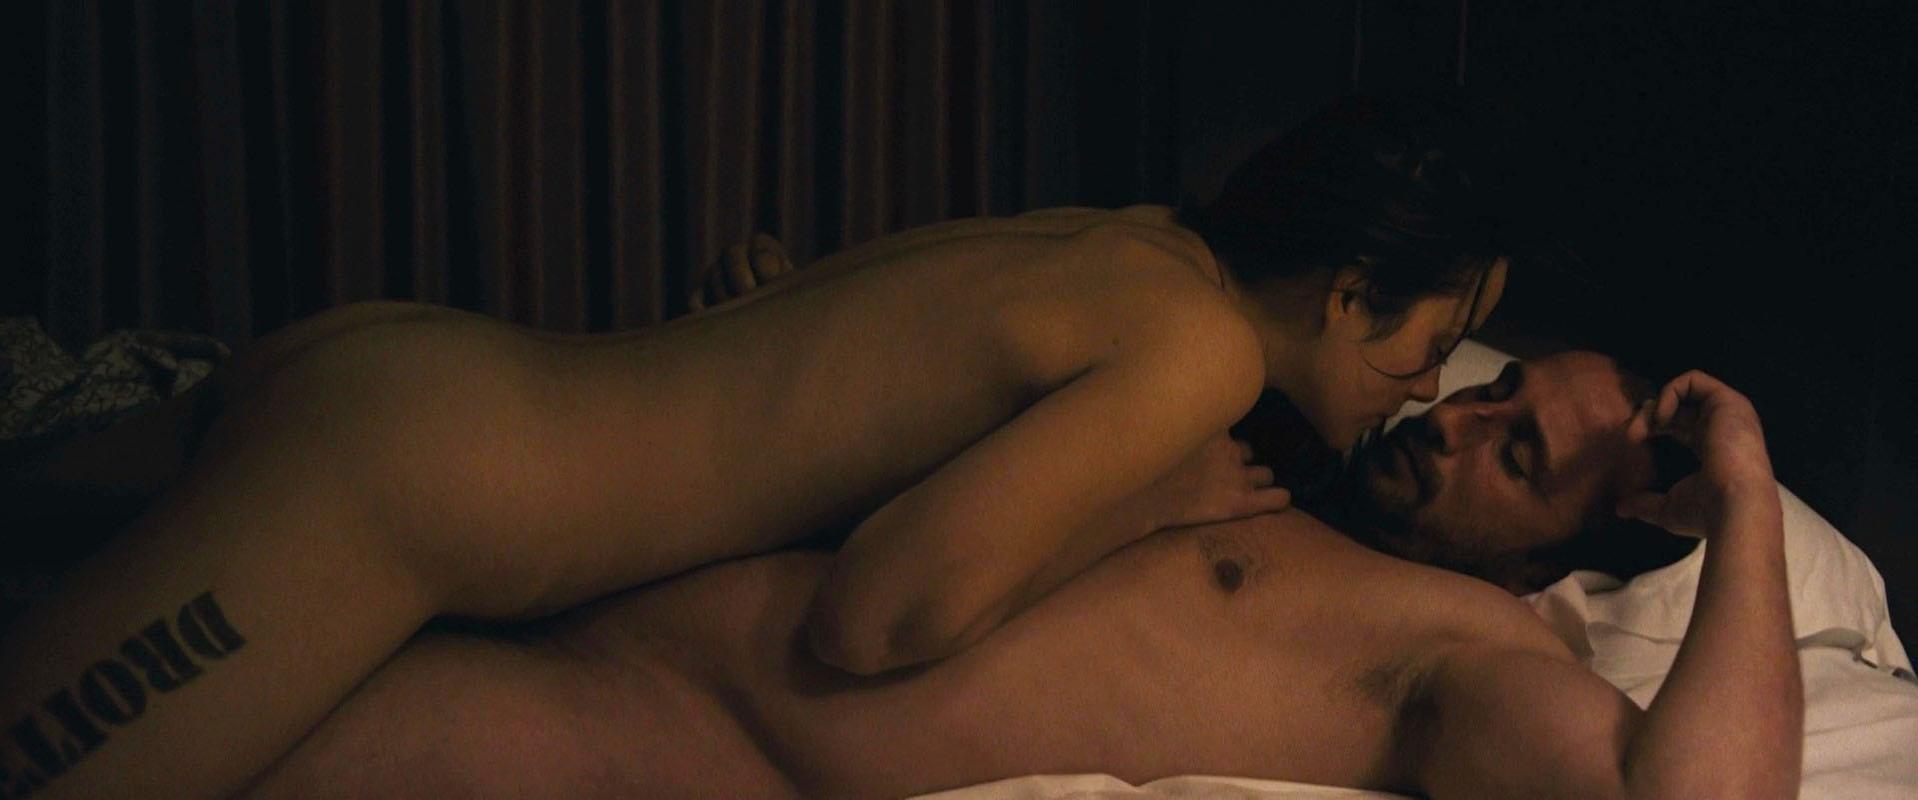 Marion Cotillard nude - Rust and Bone (2012)